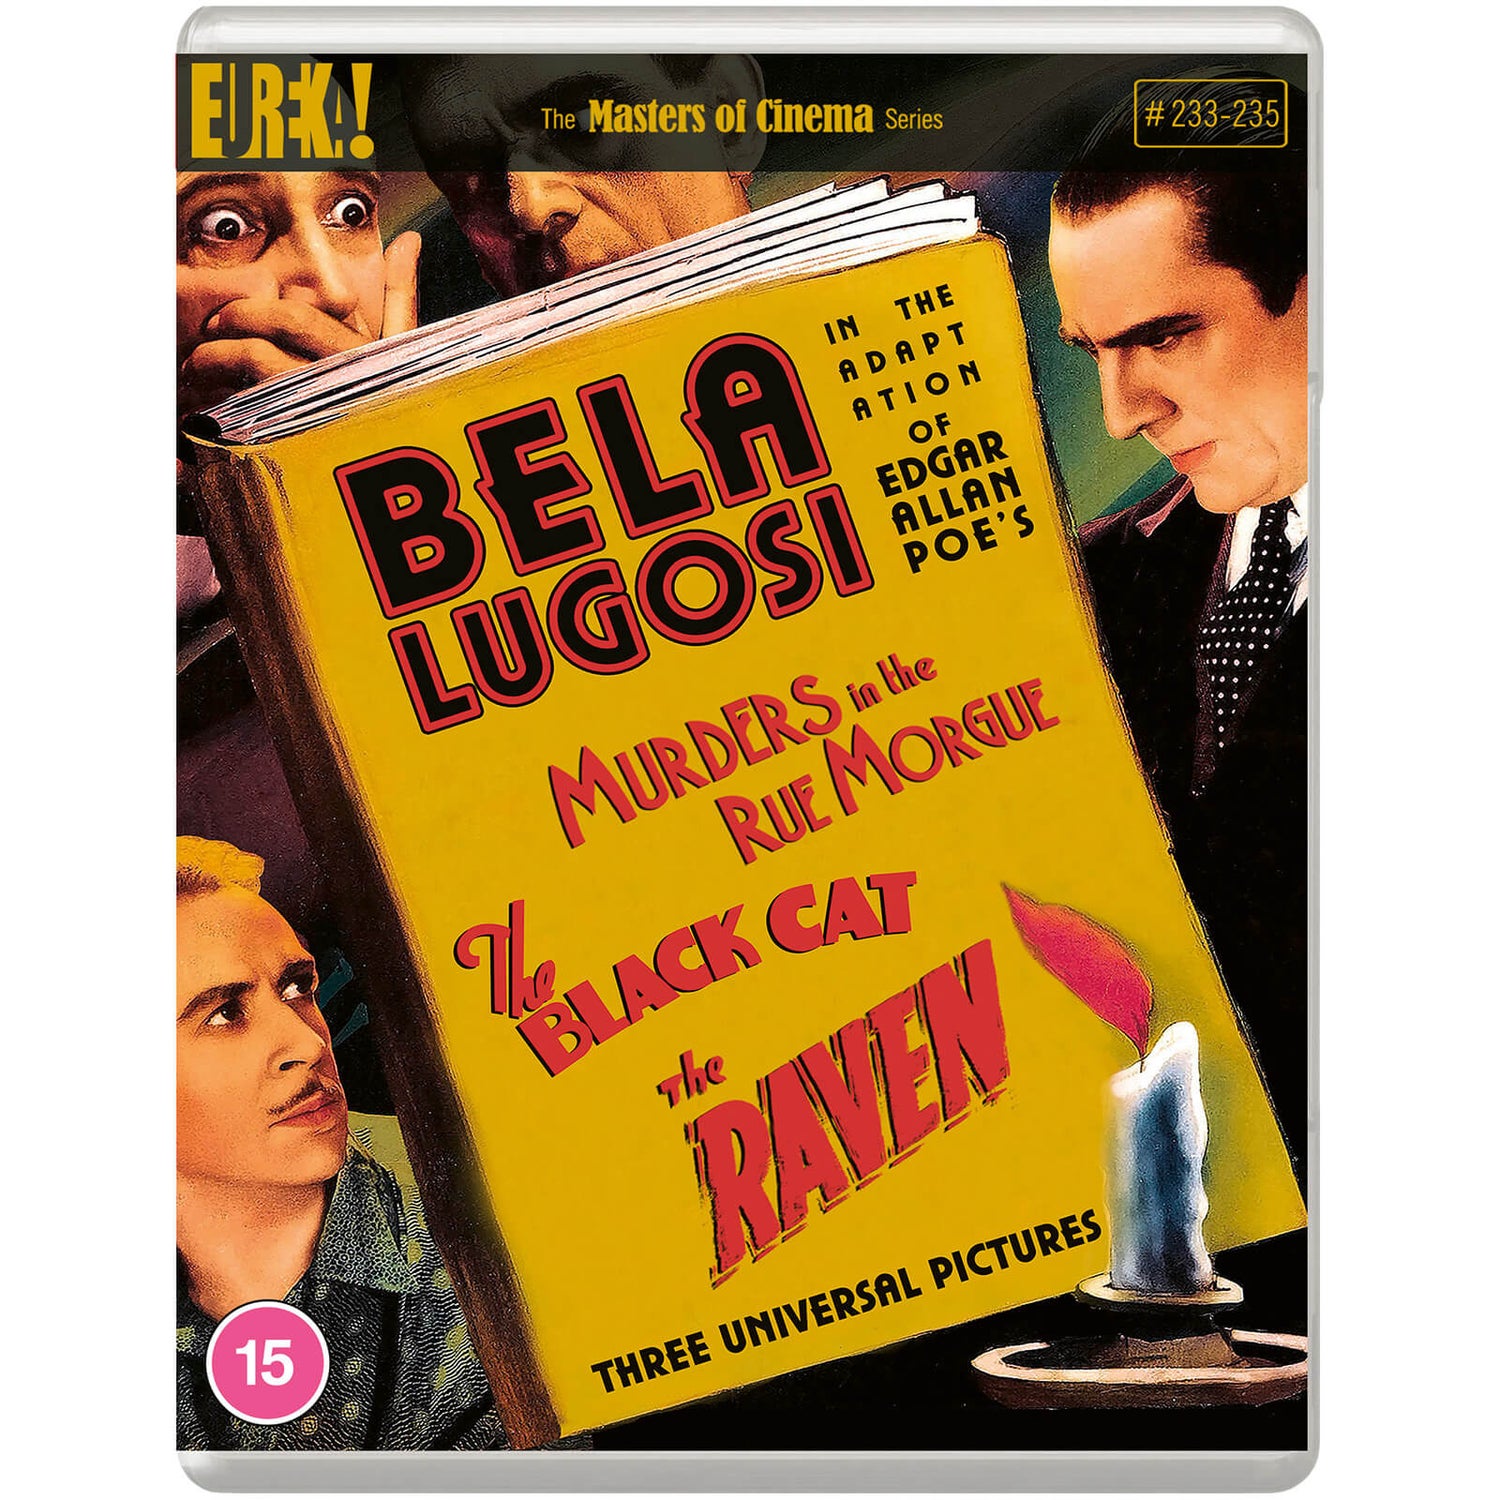 Three Edgar Allan Poe Adaptations Starring Bela Lugosi (Masters of Cinema)